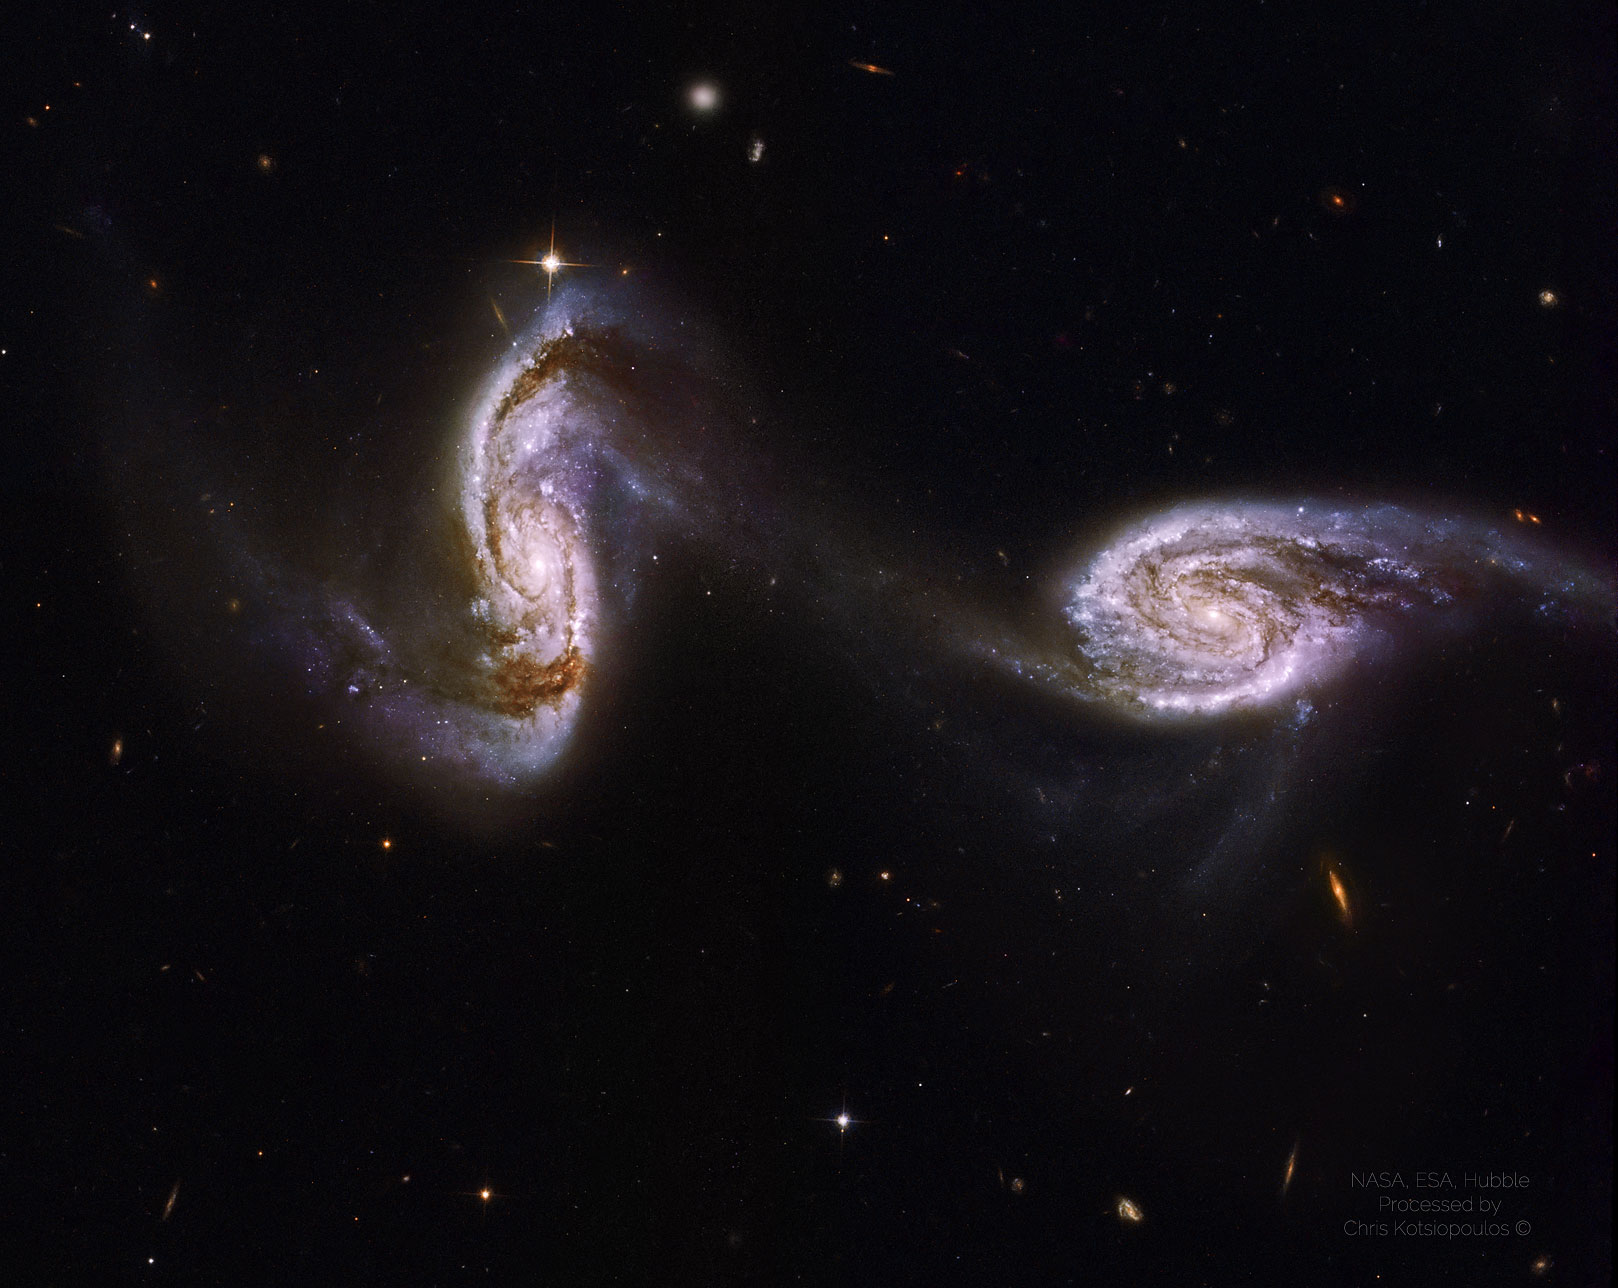 Arp 240: A Bridge between Spiral Galaxies from Hubble